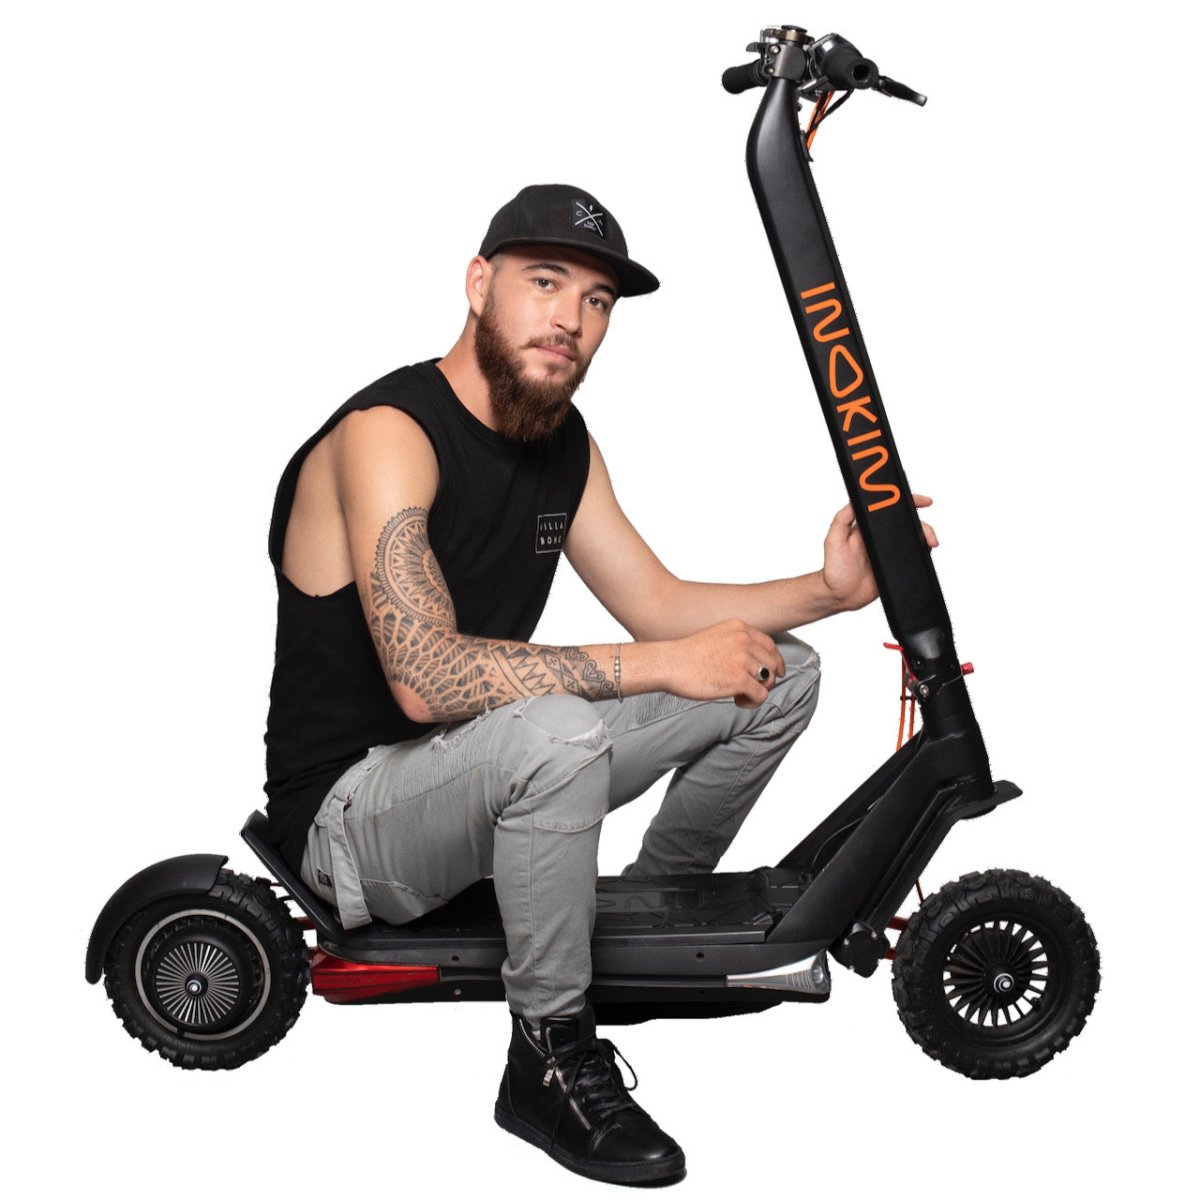 INOKIM OX electric scooter | Horizon Micromobility